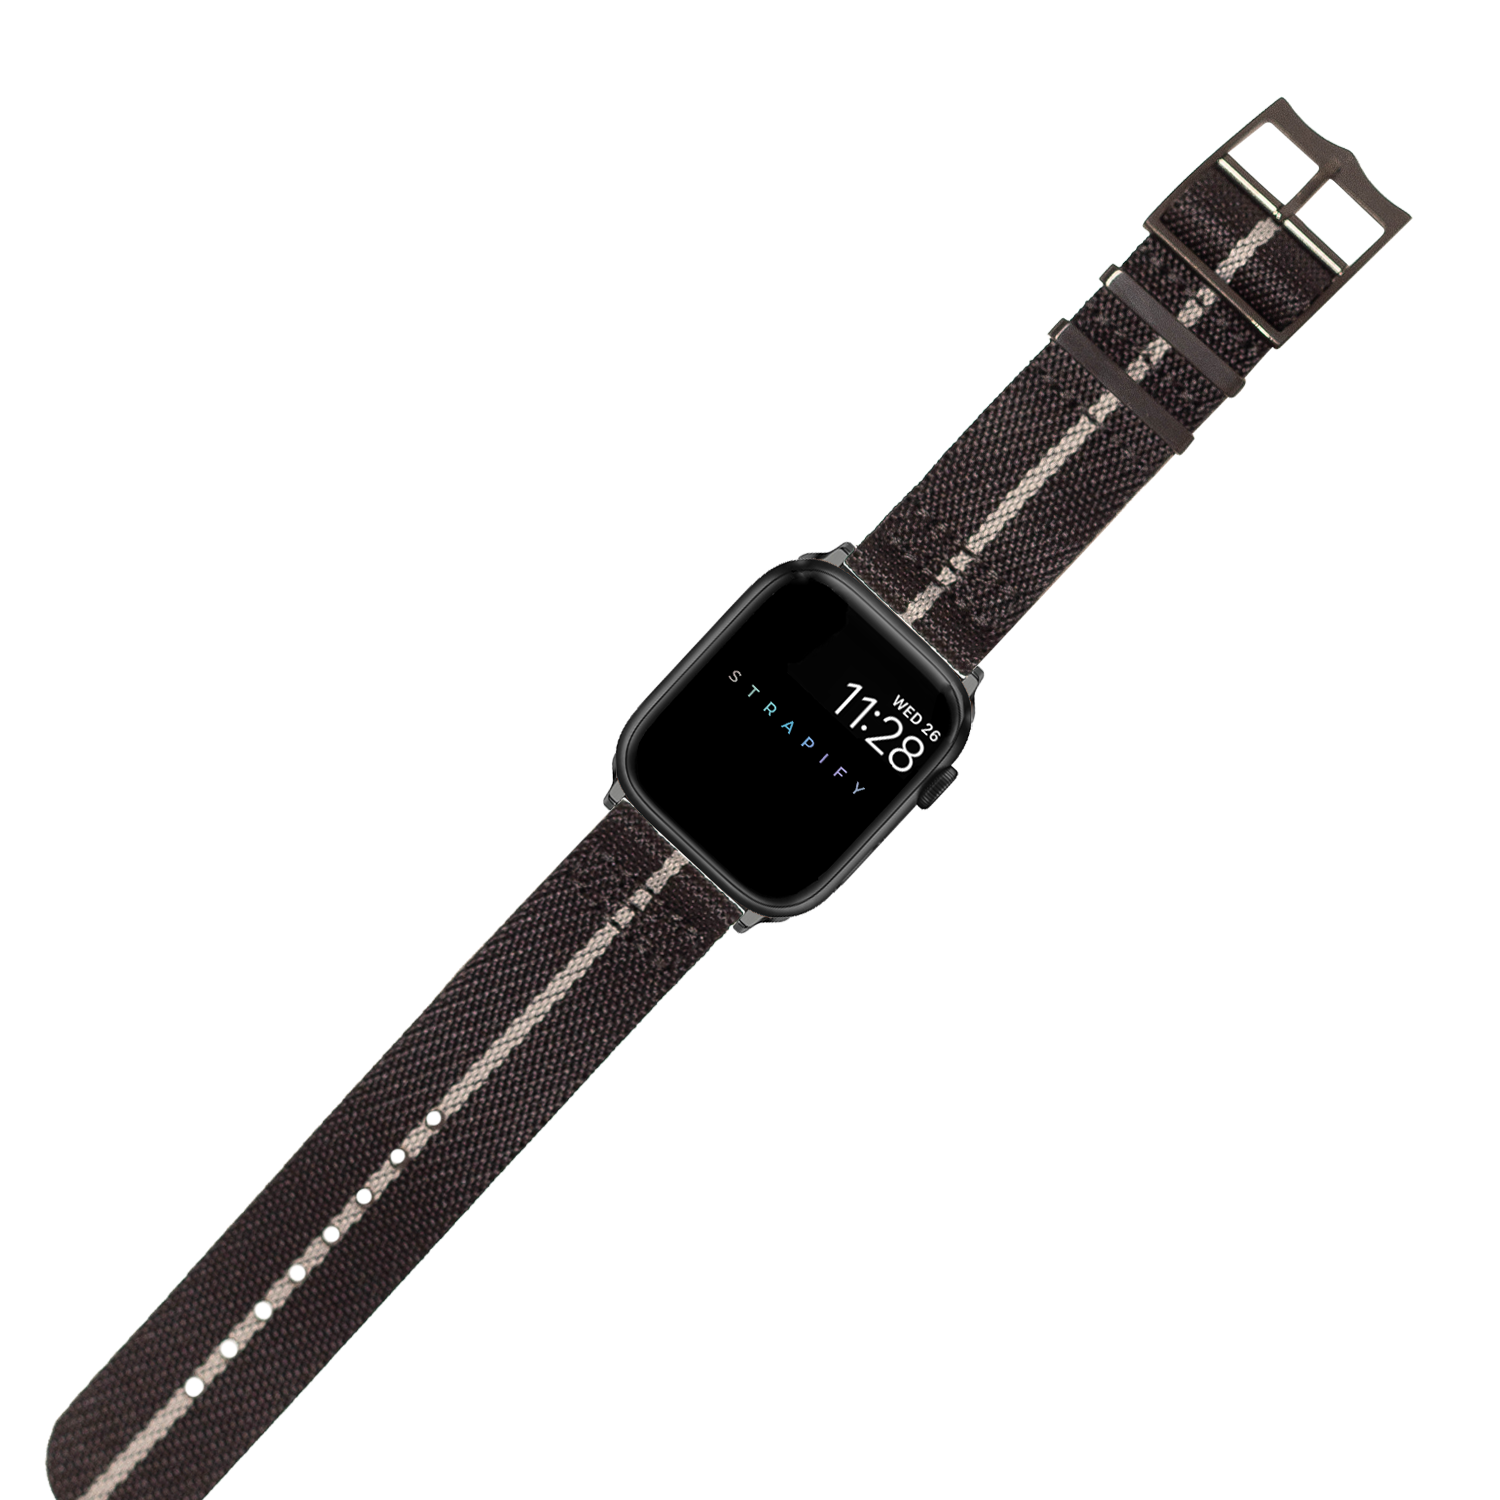 [Apple Watch] Cross Militex - Stealth Black / Grey [Black Hardware]